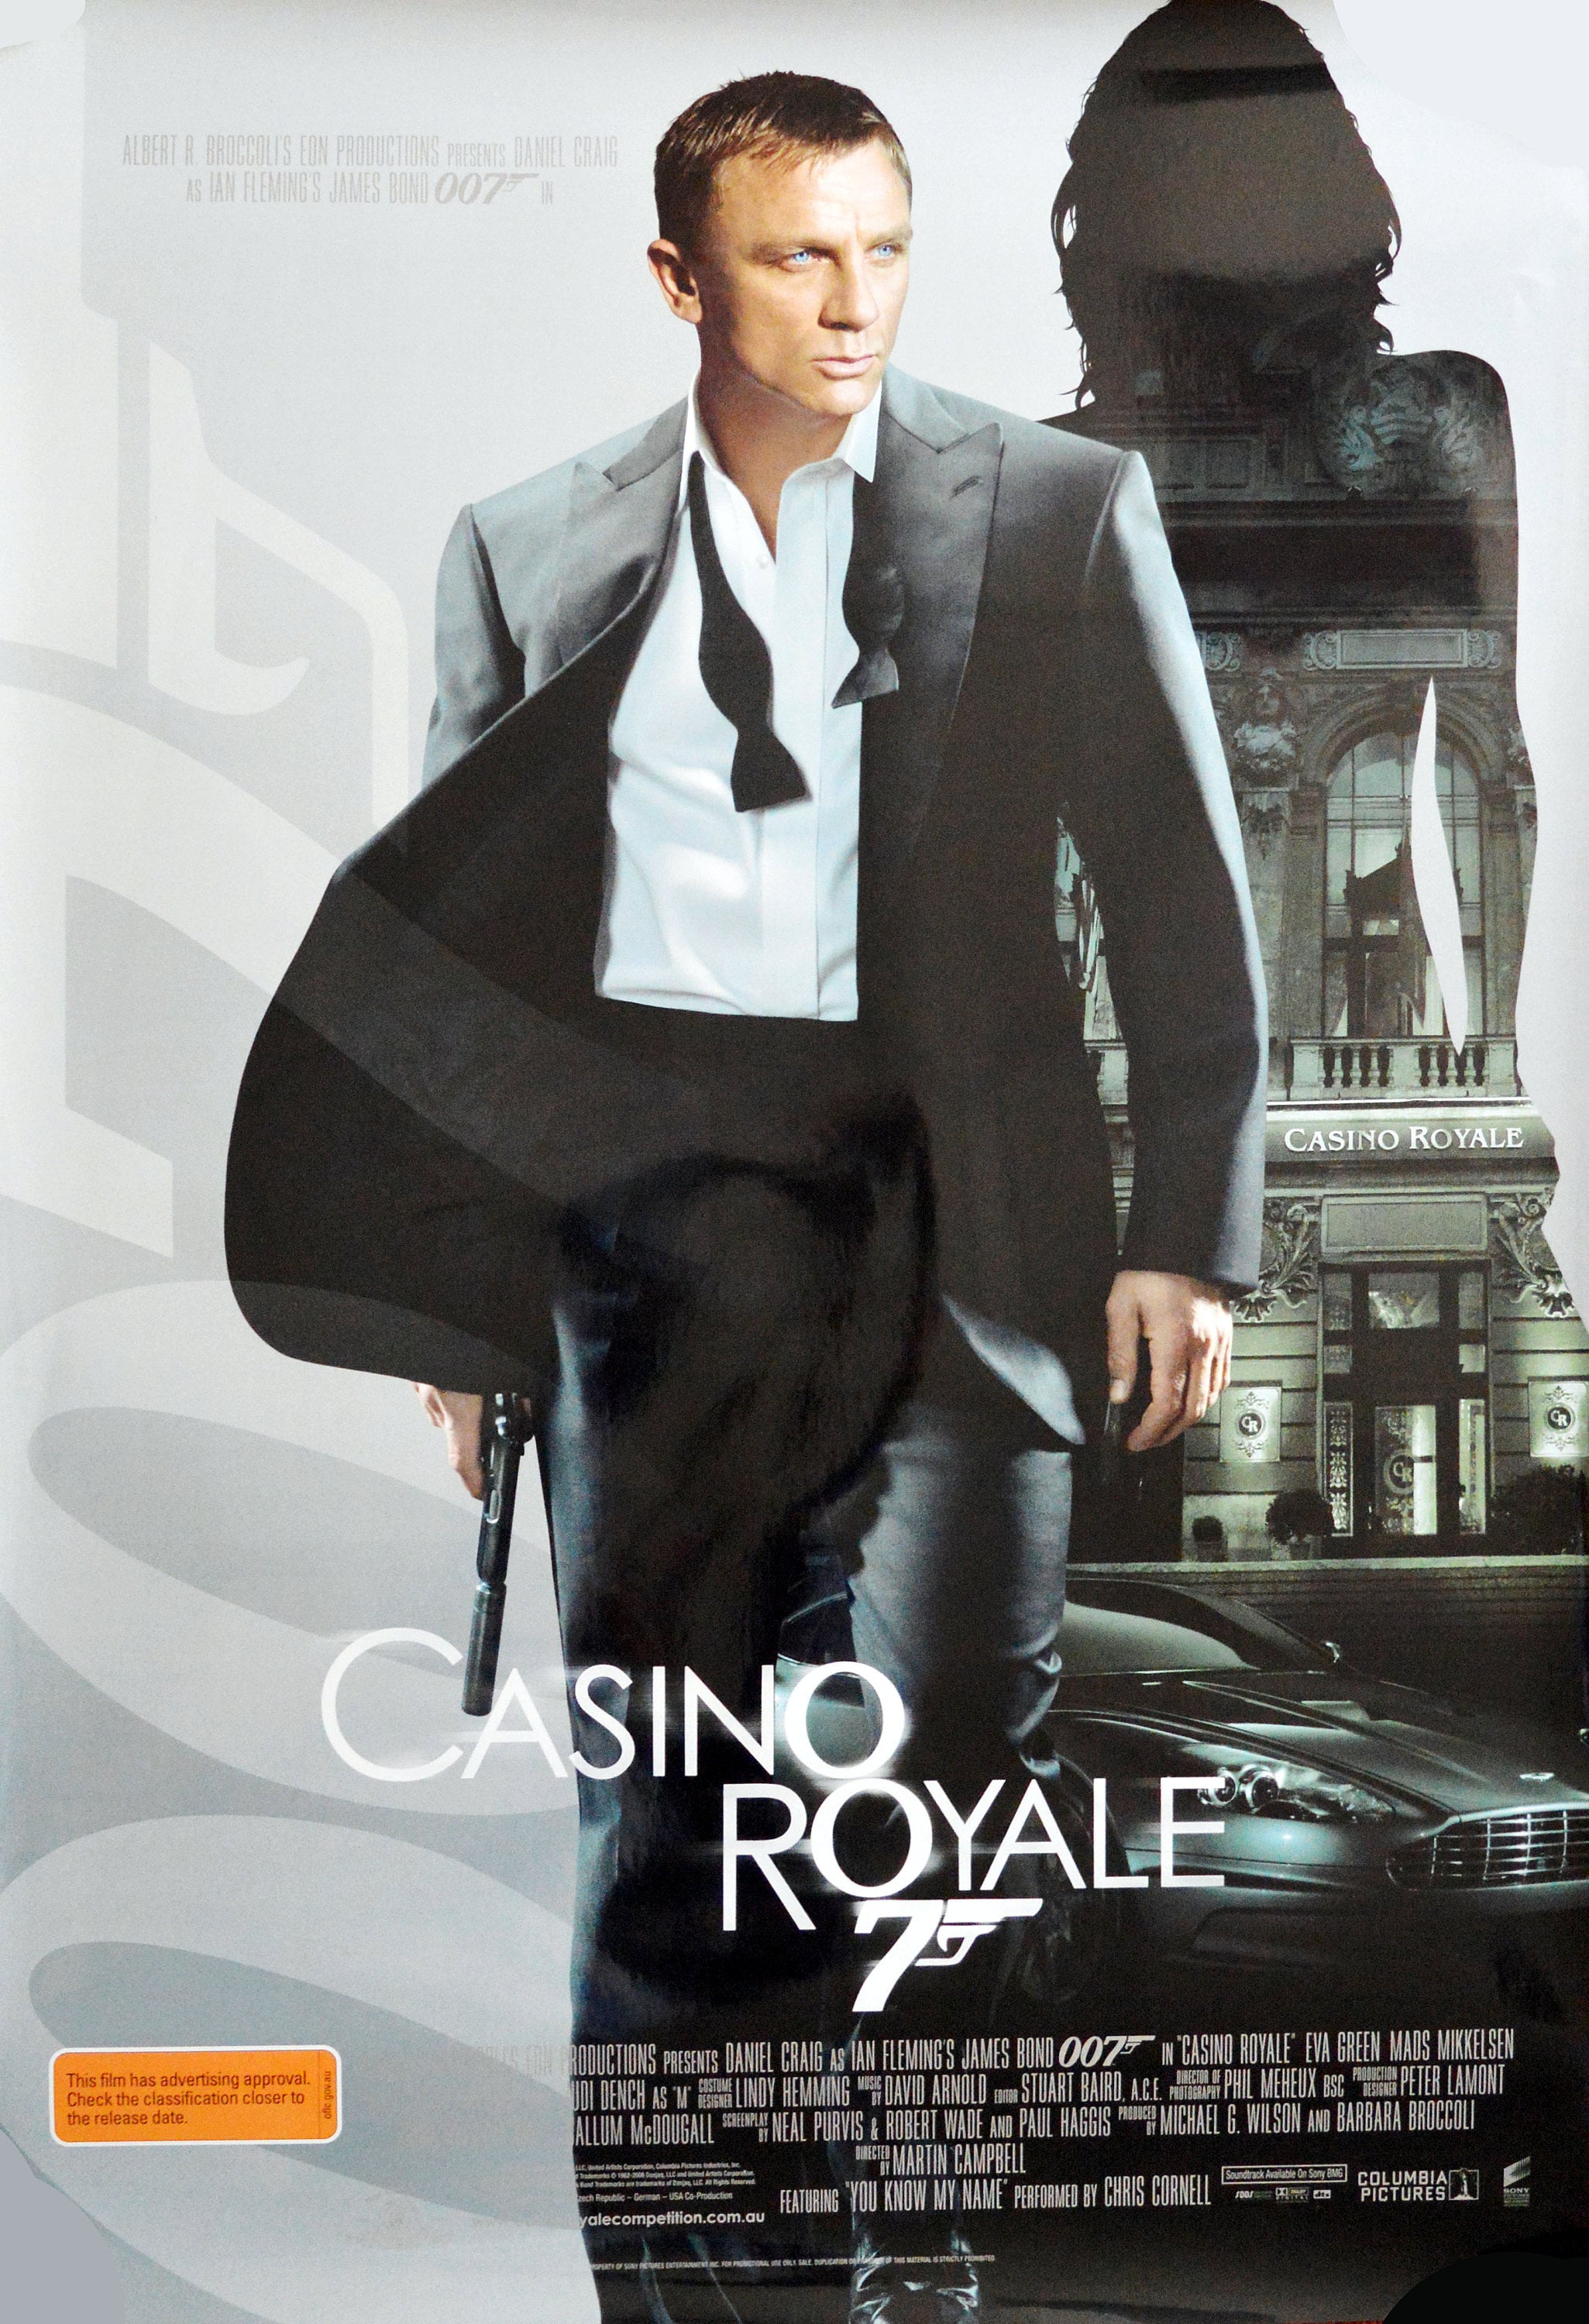 Bond James Movie Poster Royale 007 Etsy Denmark